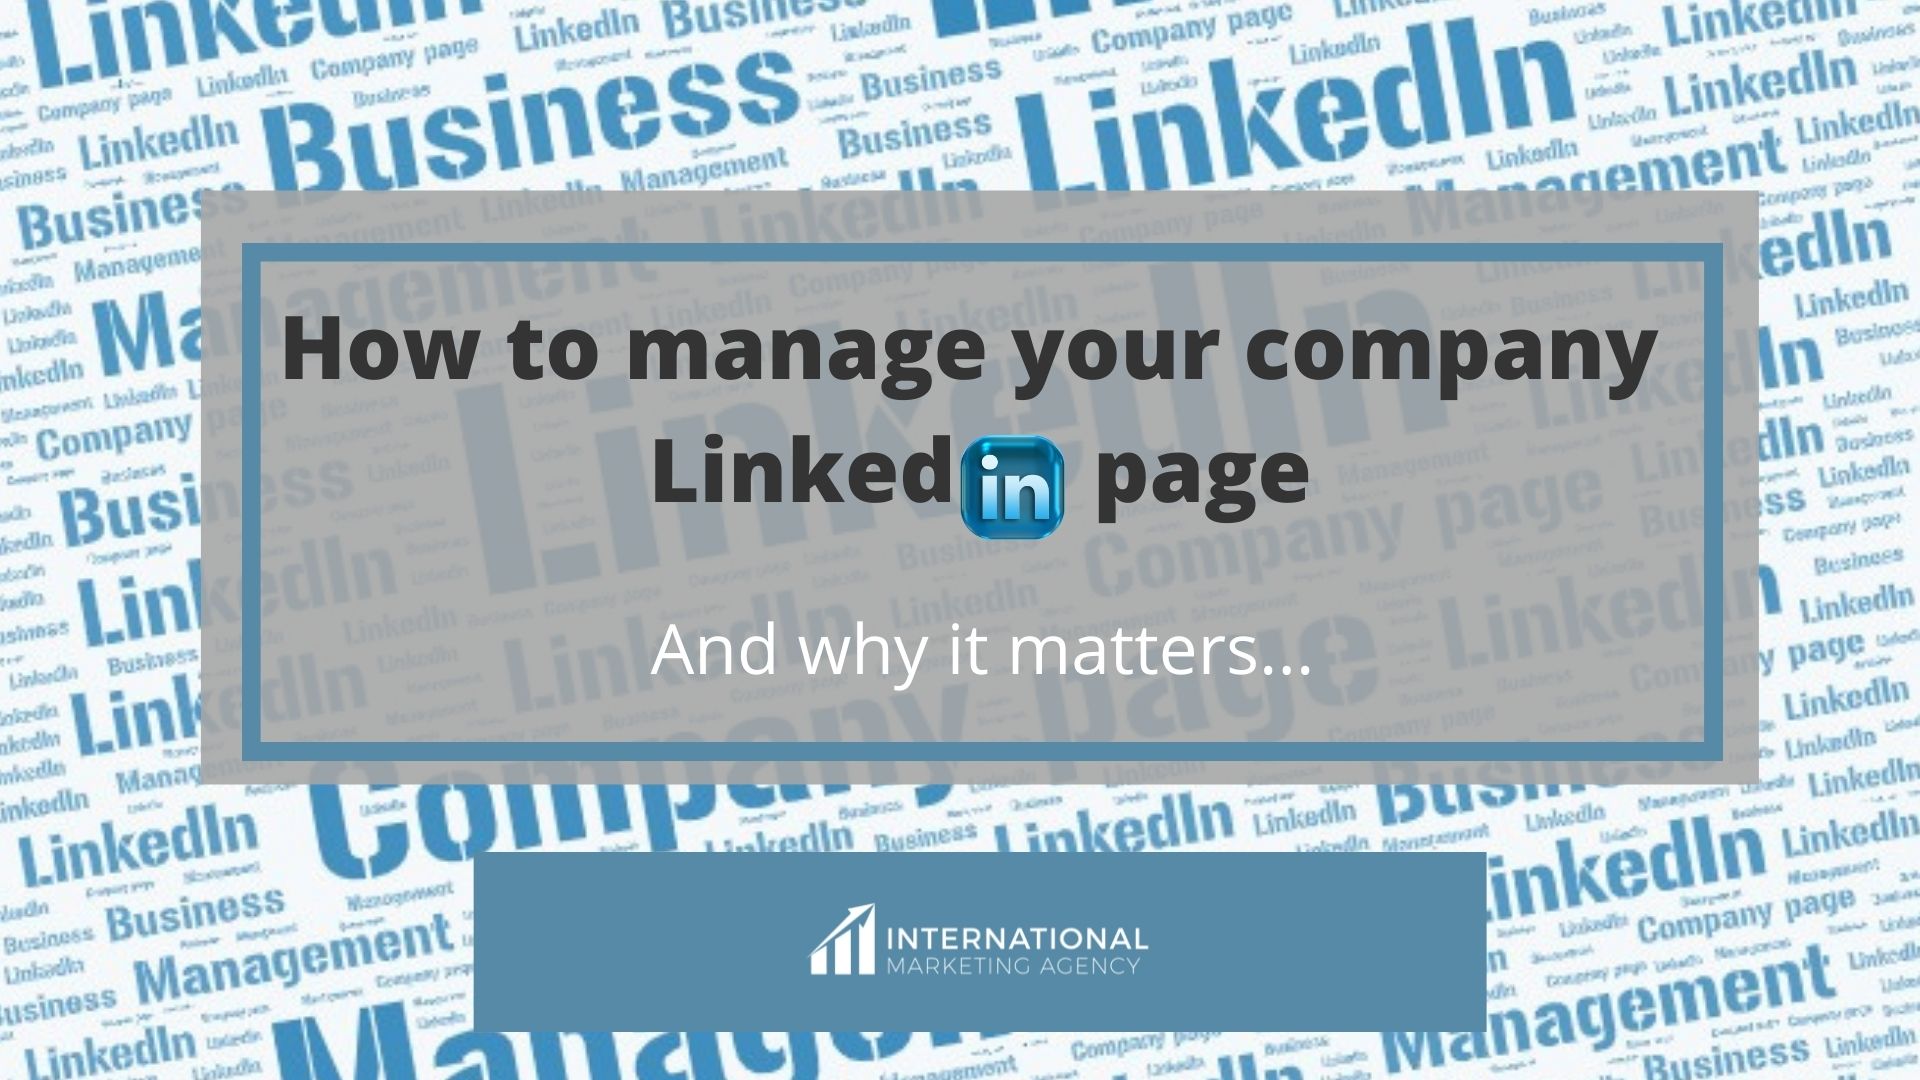 LinkedIn company page management